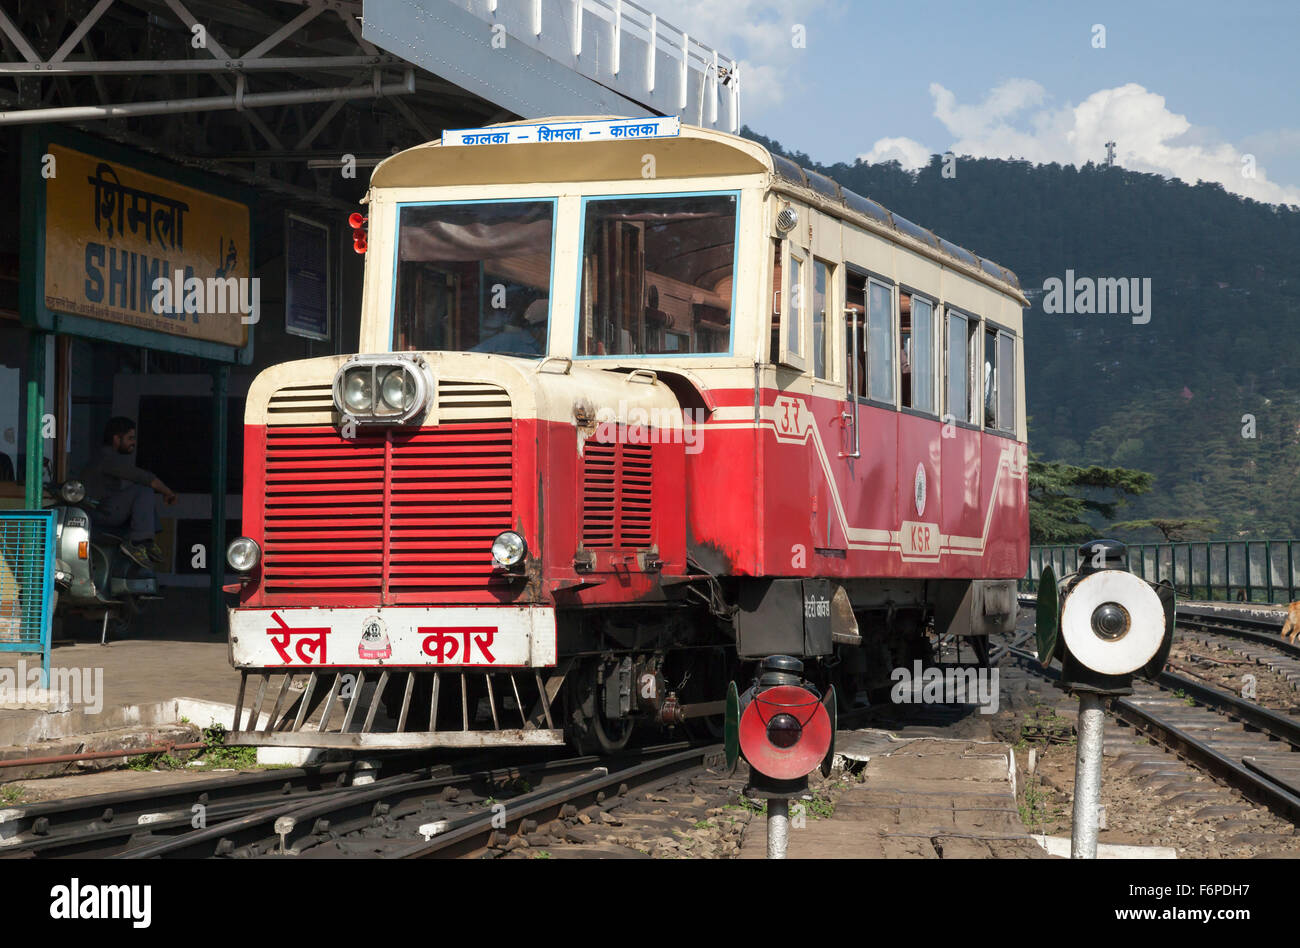 Railcar No.4 of the Kalka-Shimla Railway at Shimla railway station Stock Photo